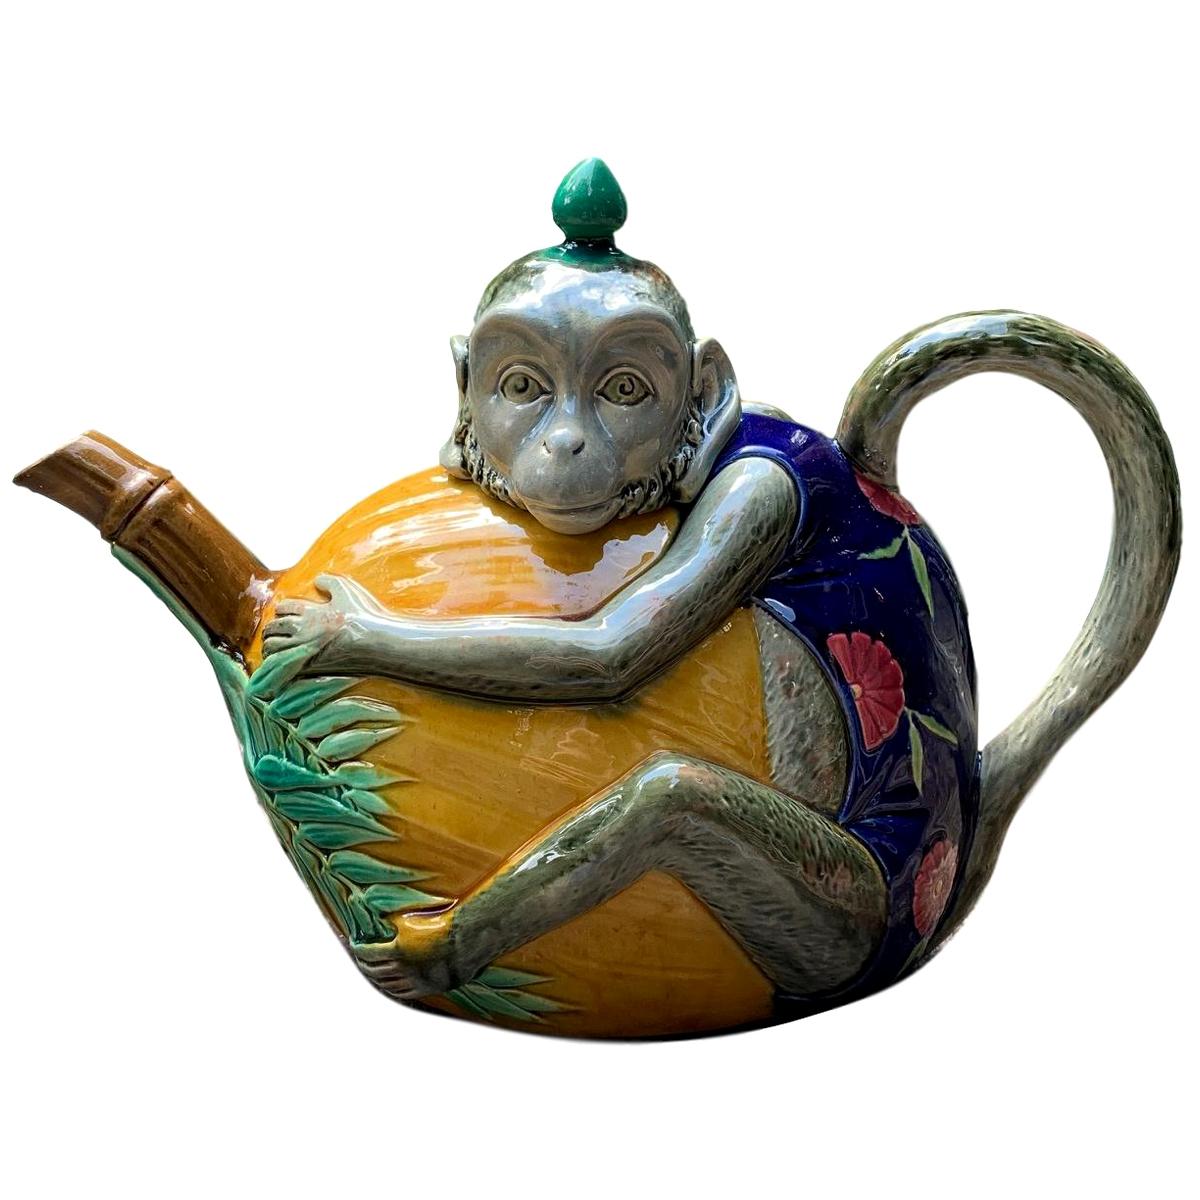 Minton Majolica Monkey Teapot, English, dated 1879